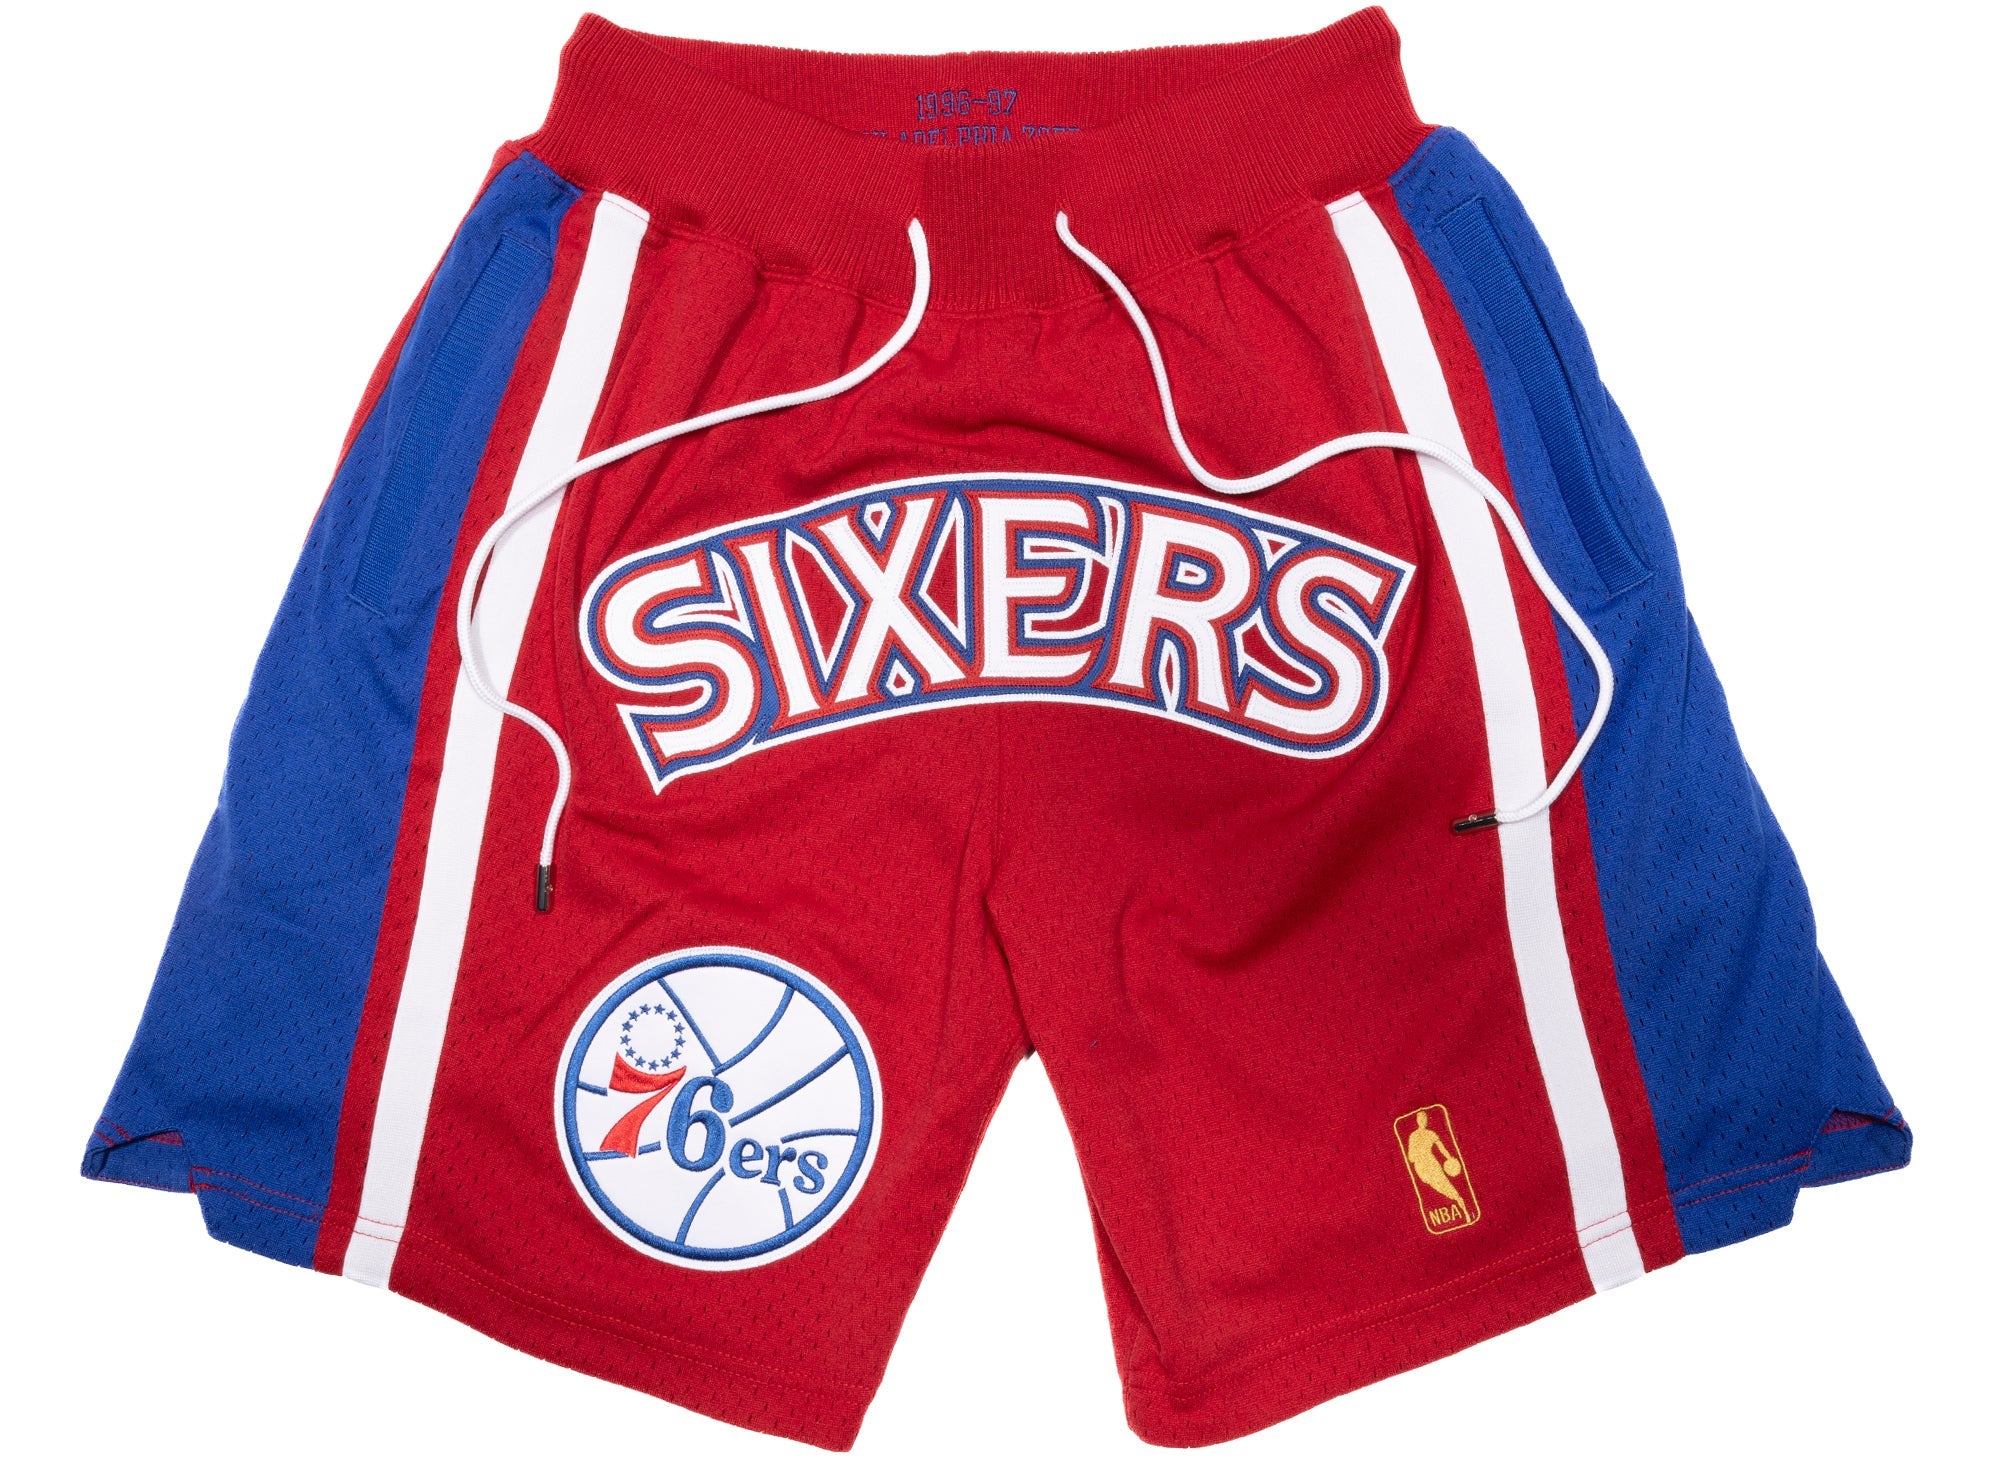 Men's Fanatics Branded Royal Philadelphia 76ers Let's Go Shorts Size: Medium